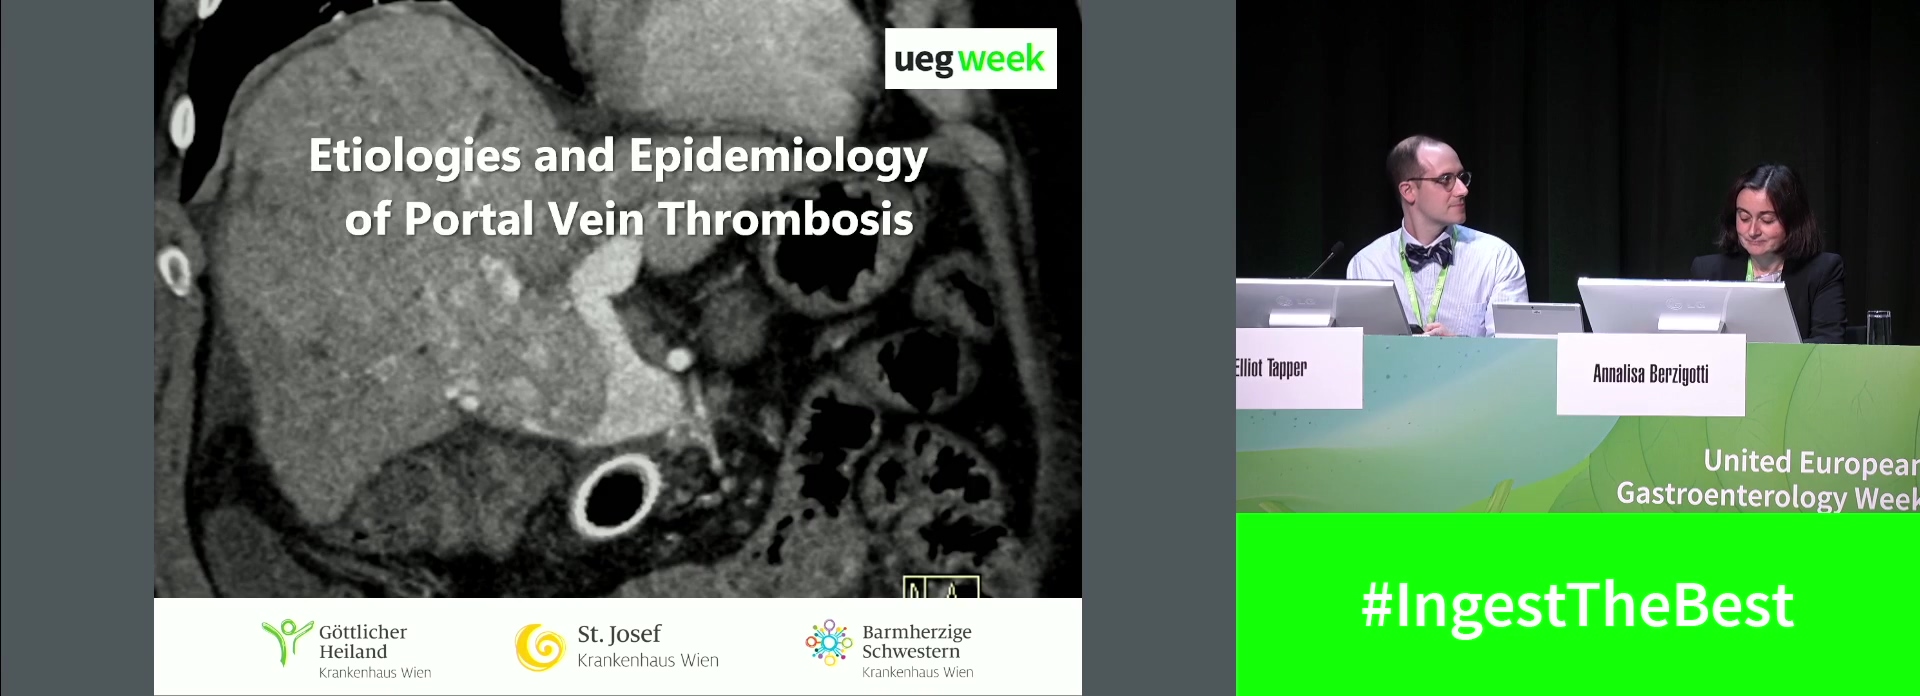 Etiologies and epidemiology  of portal vein thrombosis